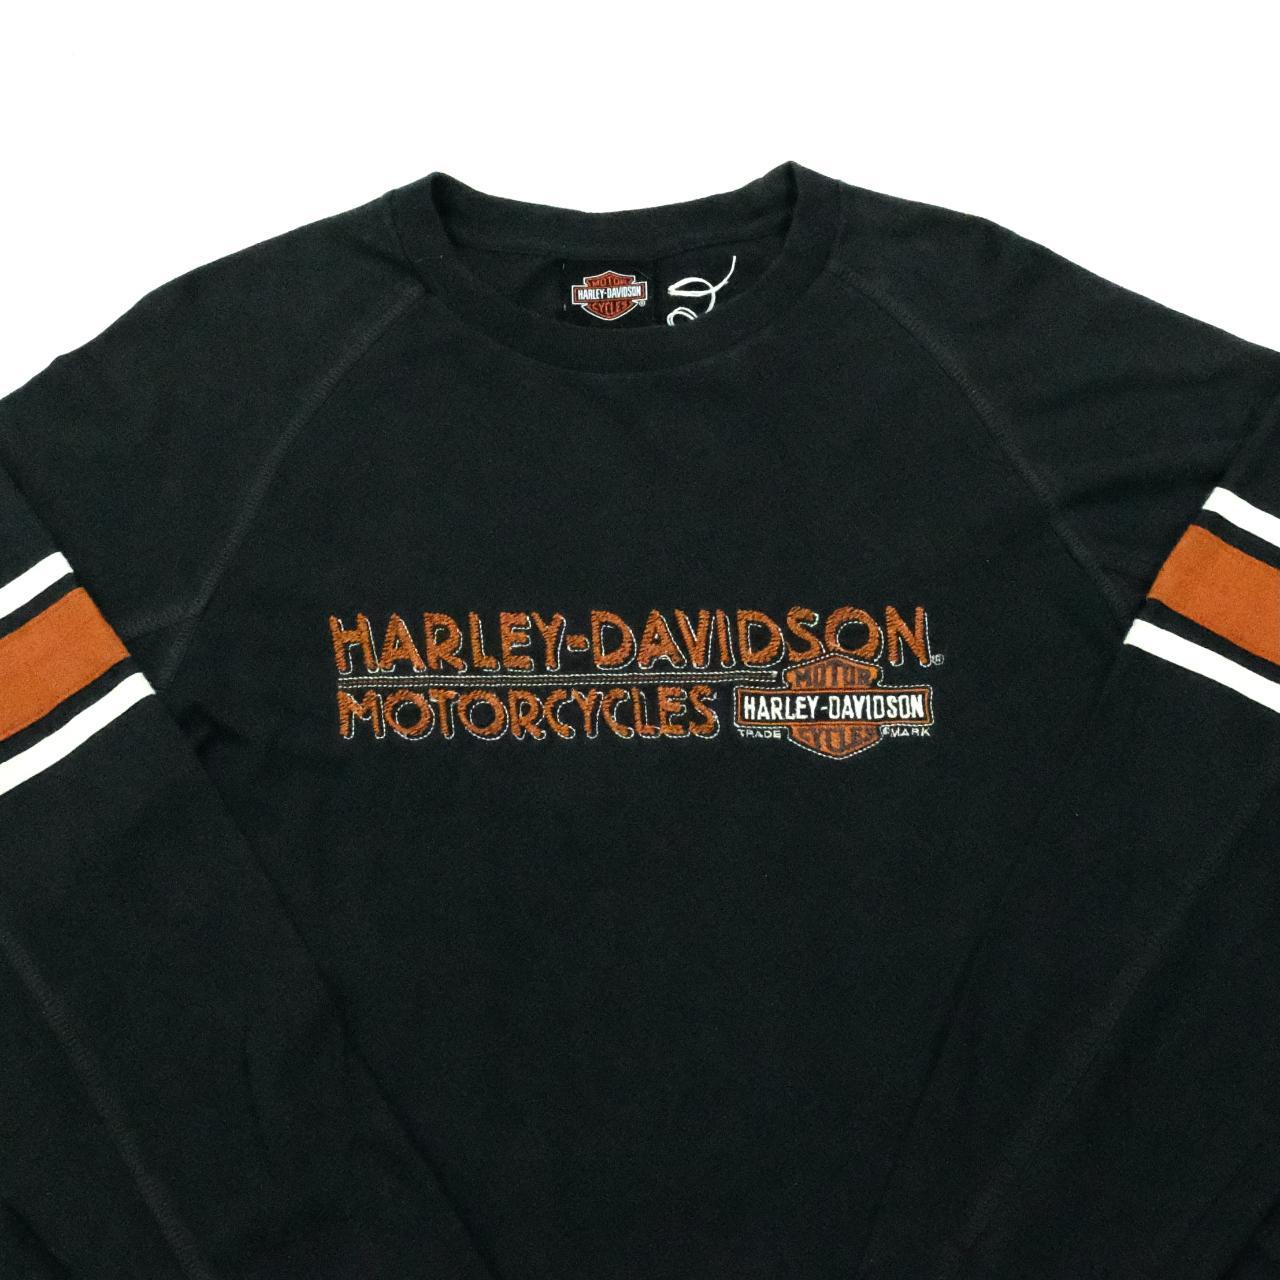 Harley Davidson Top